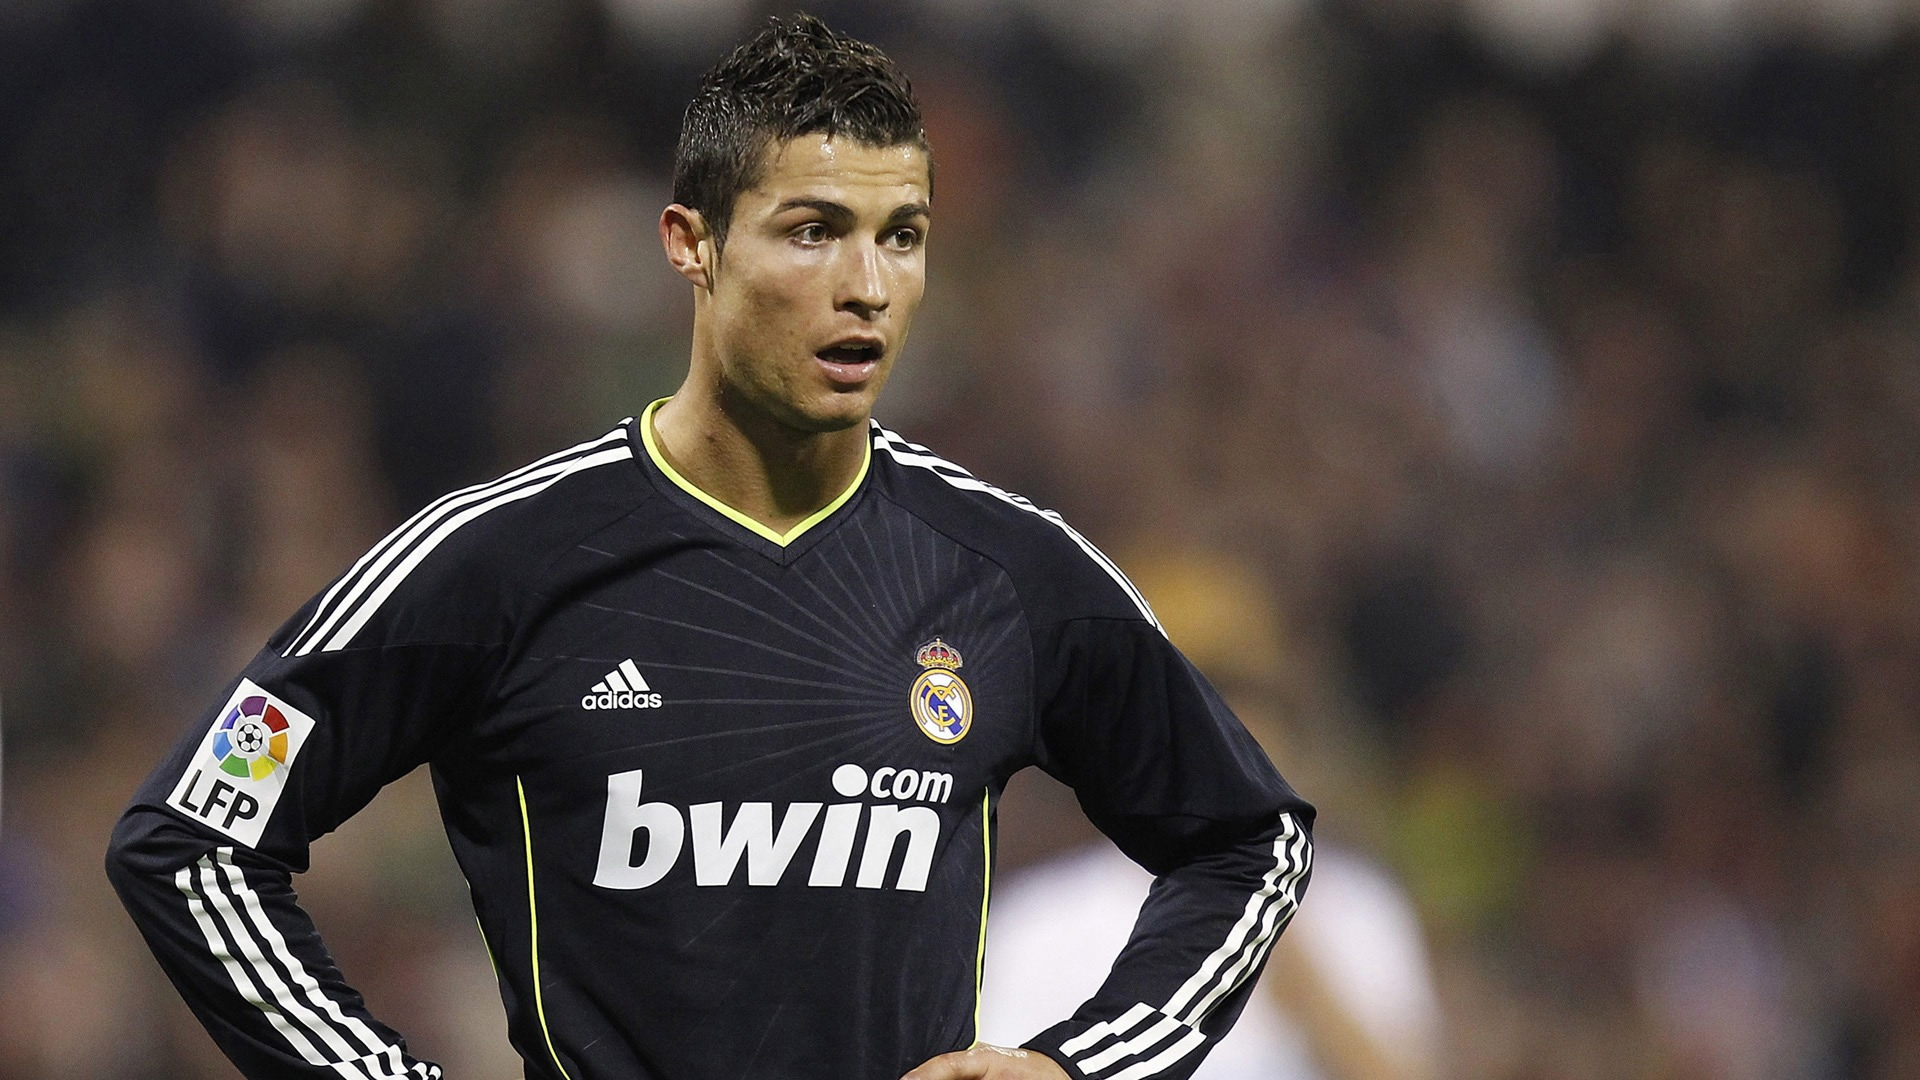 Ronaldo real madrid black shirt wallpaperx1080